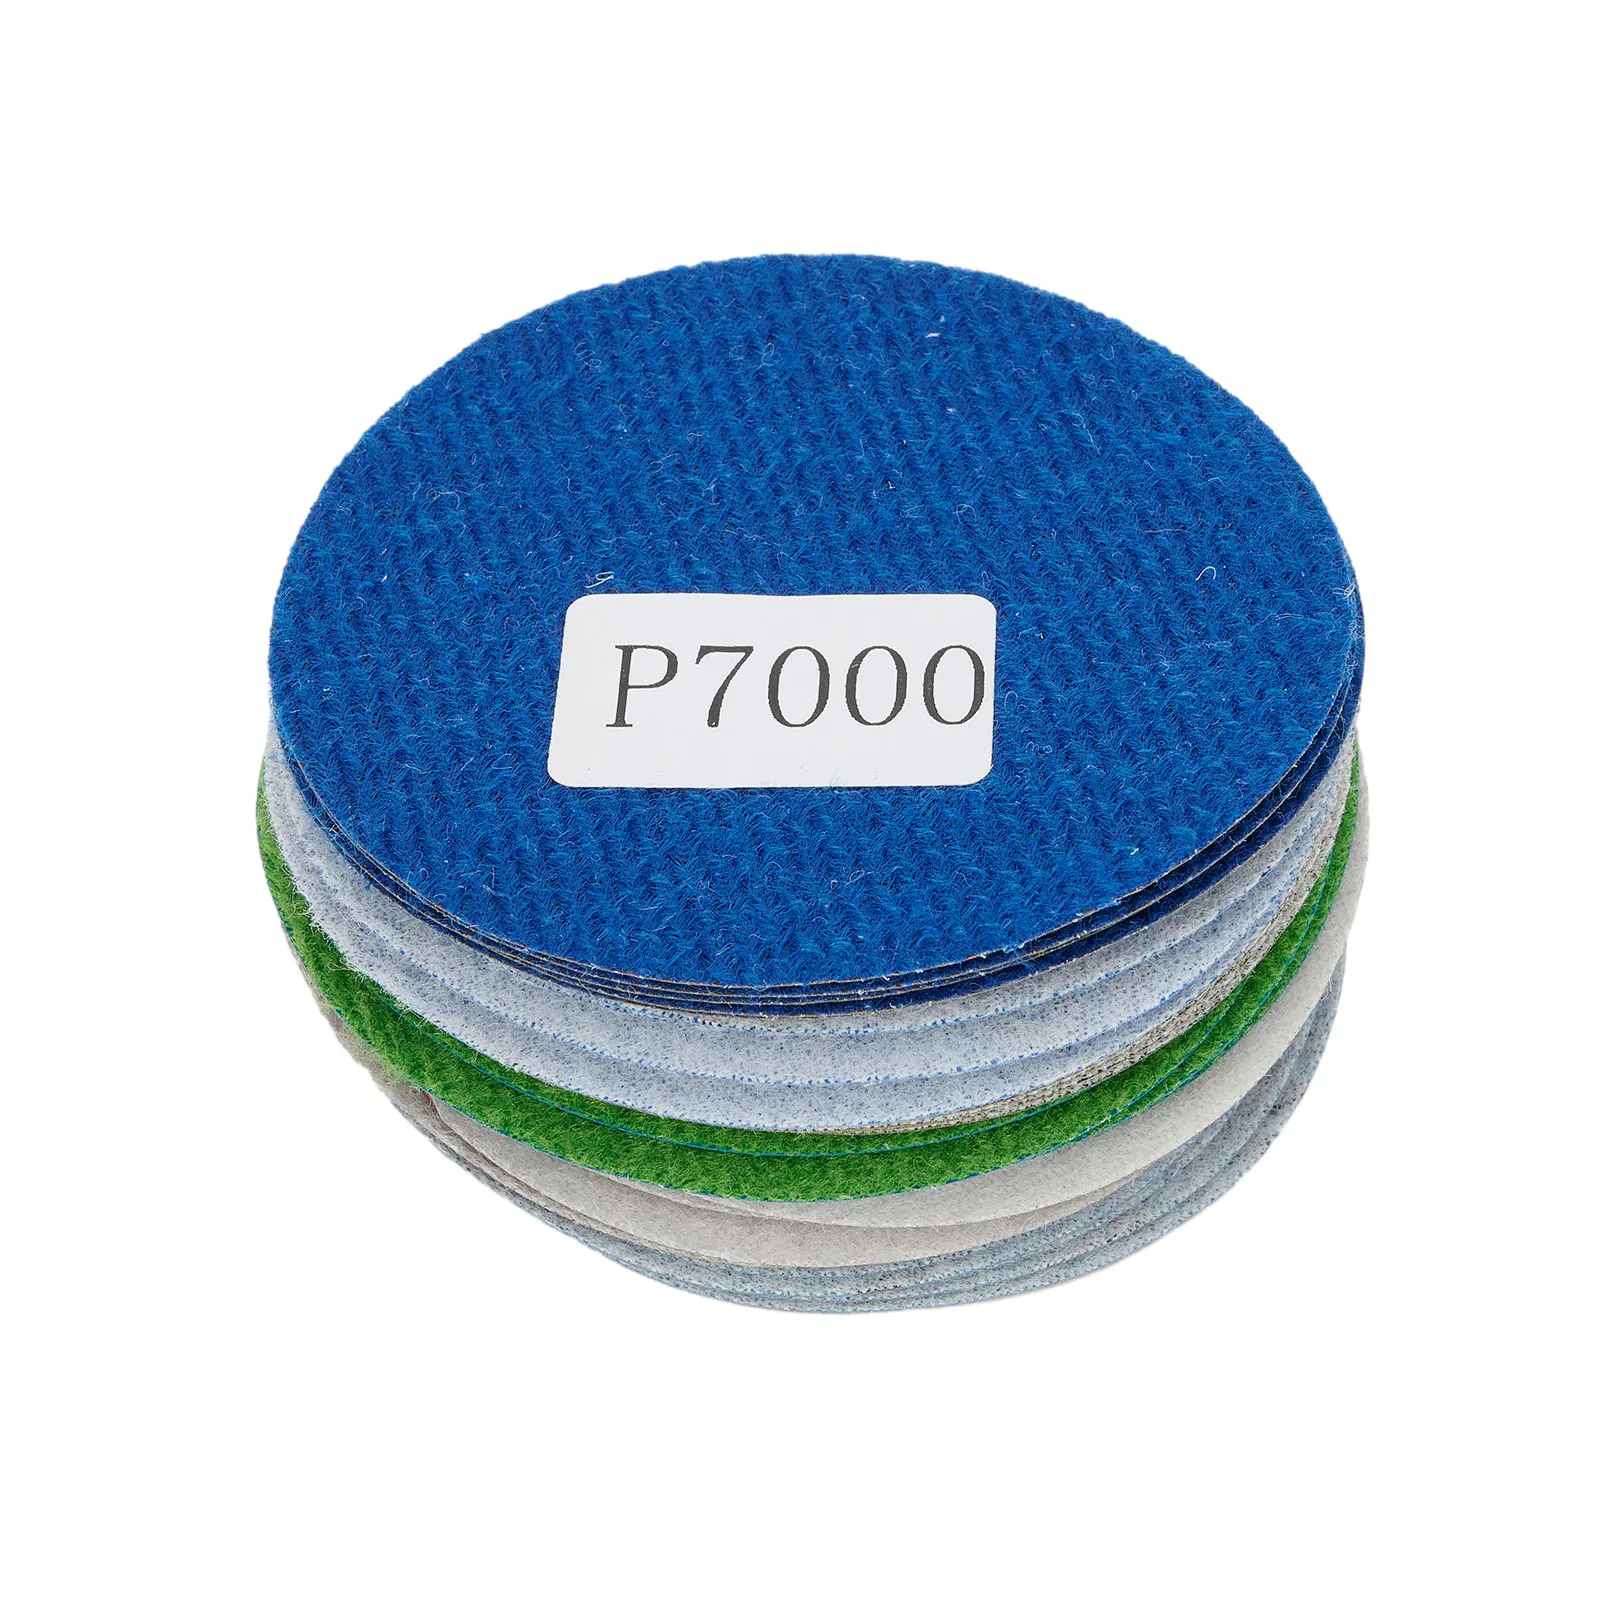 Durable Accessories Sanding discs Polishing Sandpaper Tools Waterproof Wet & Dry 1000/2000/3000/4000/5000/7000 grit 30pcs